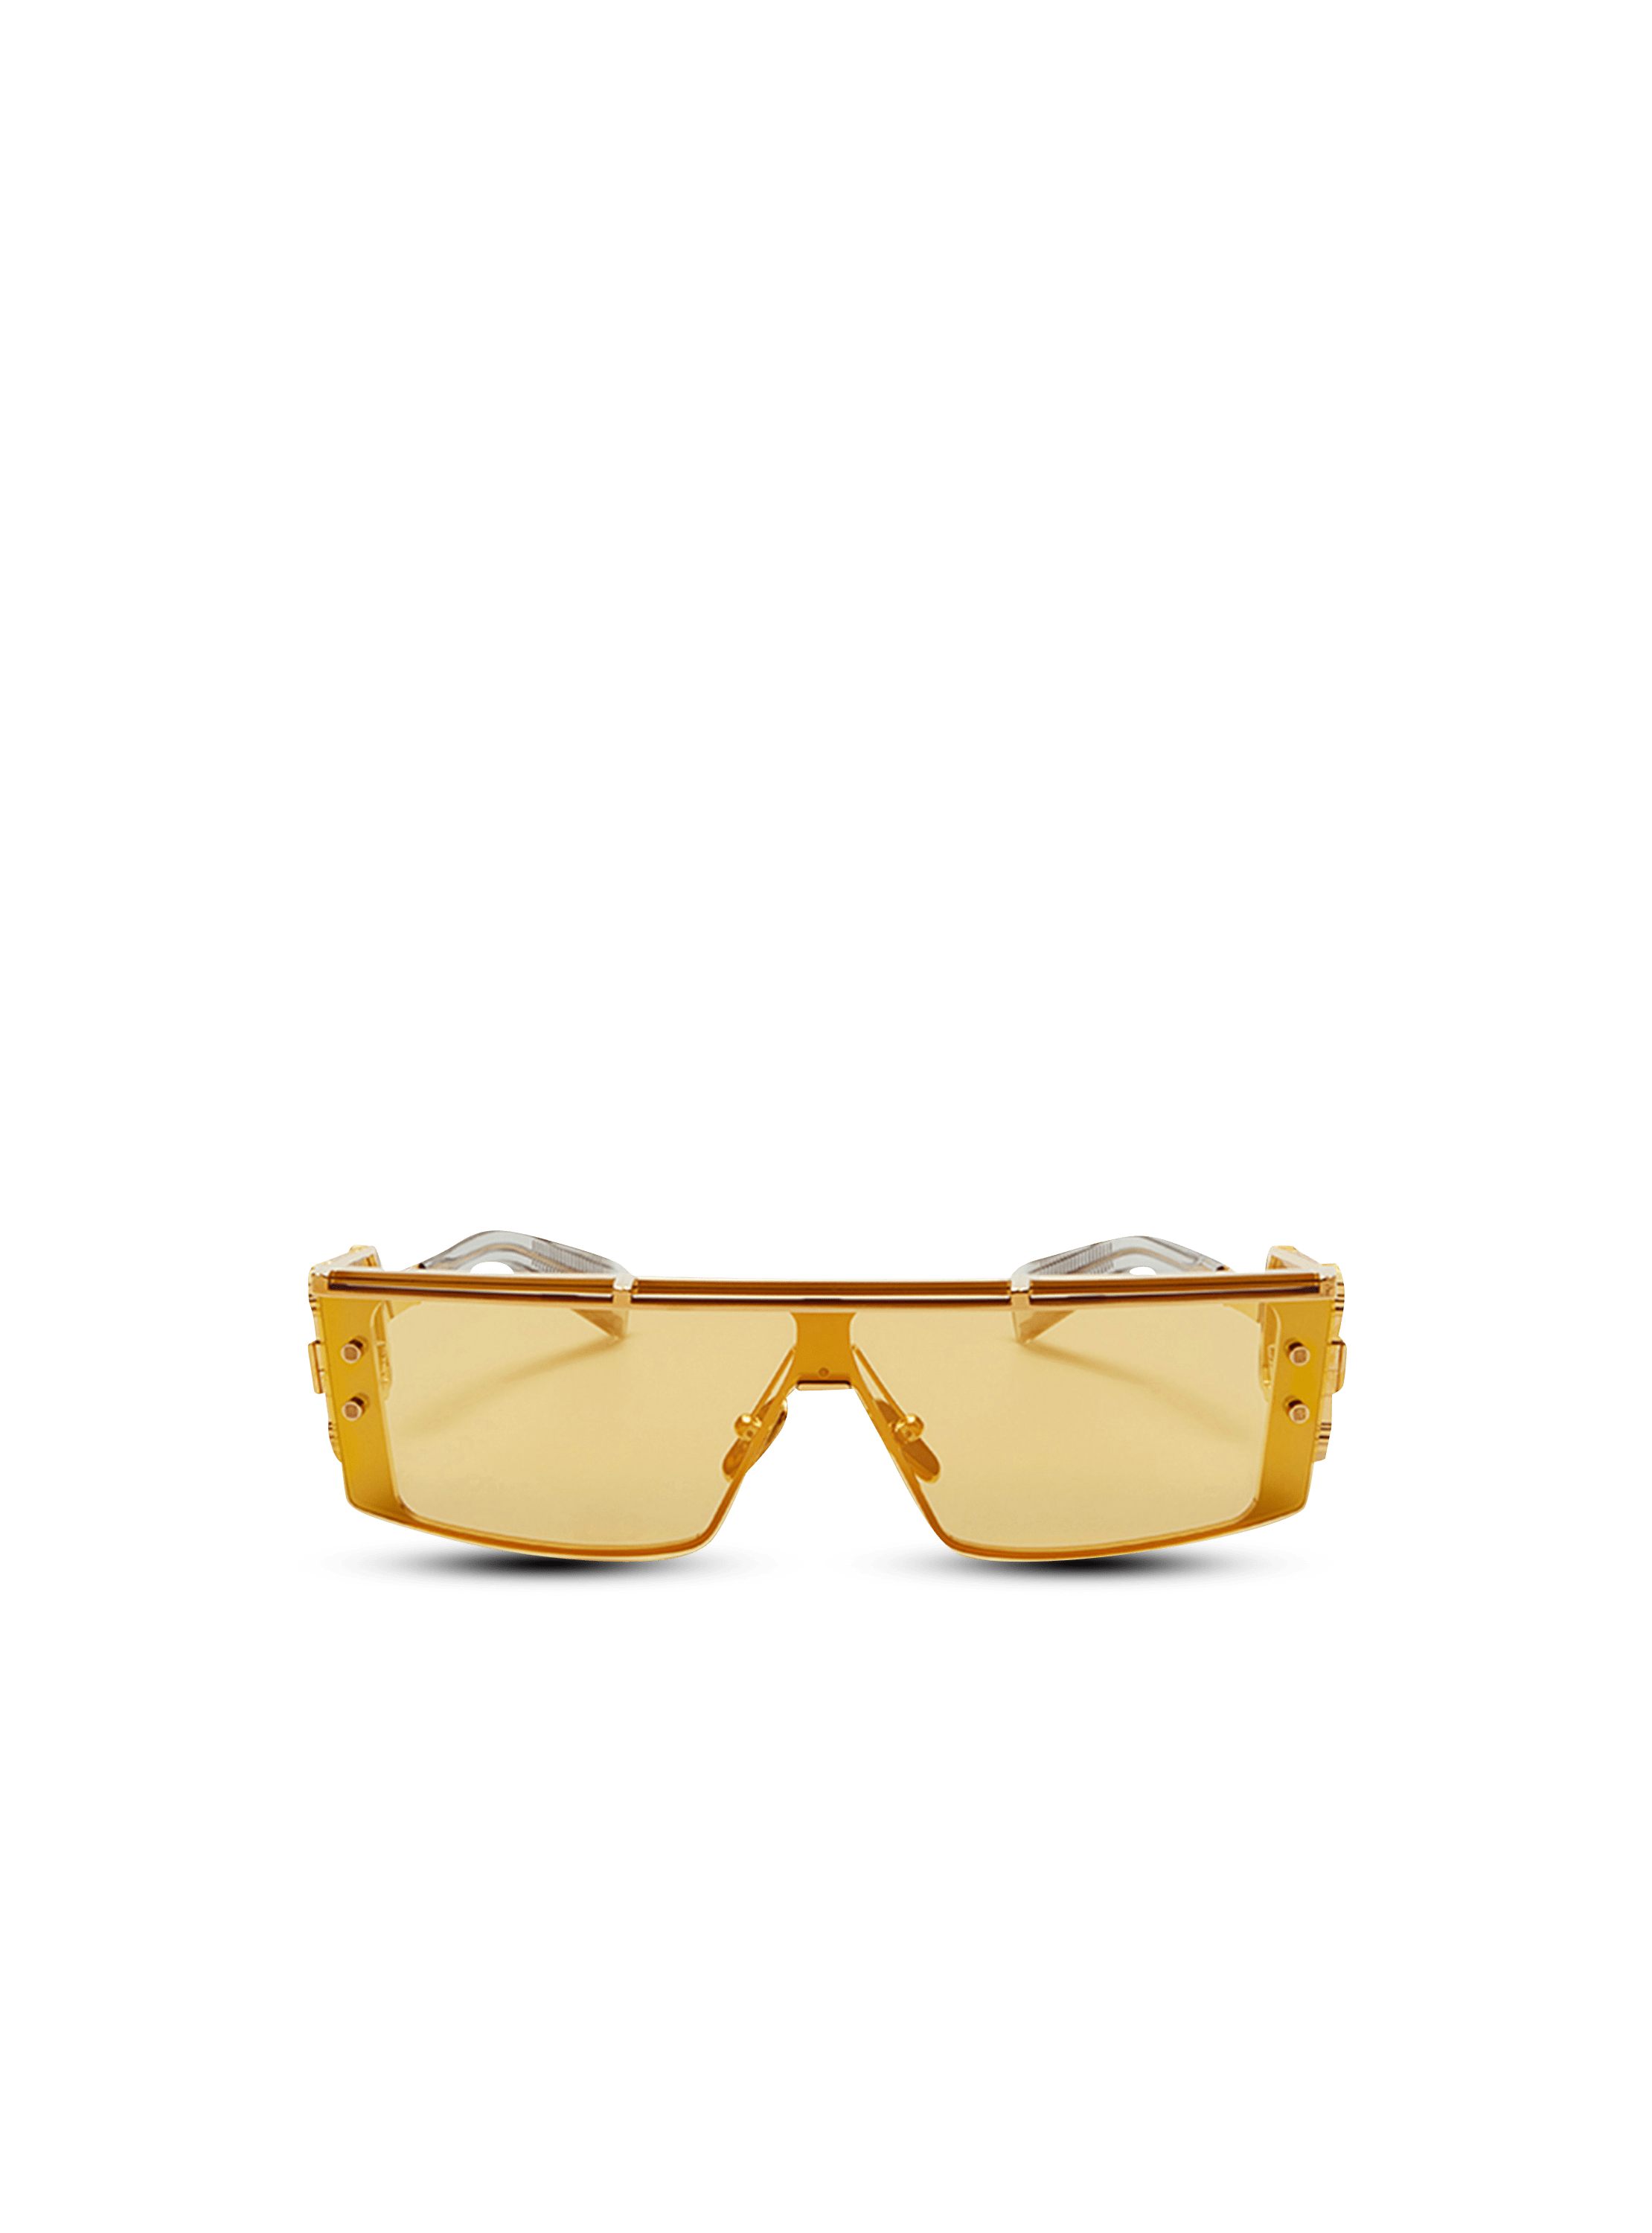 Wonder Boy III sunglasses